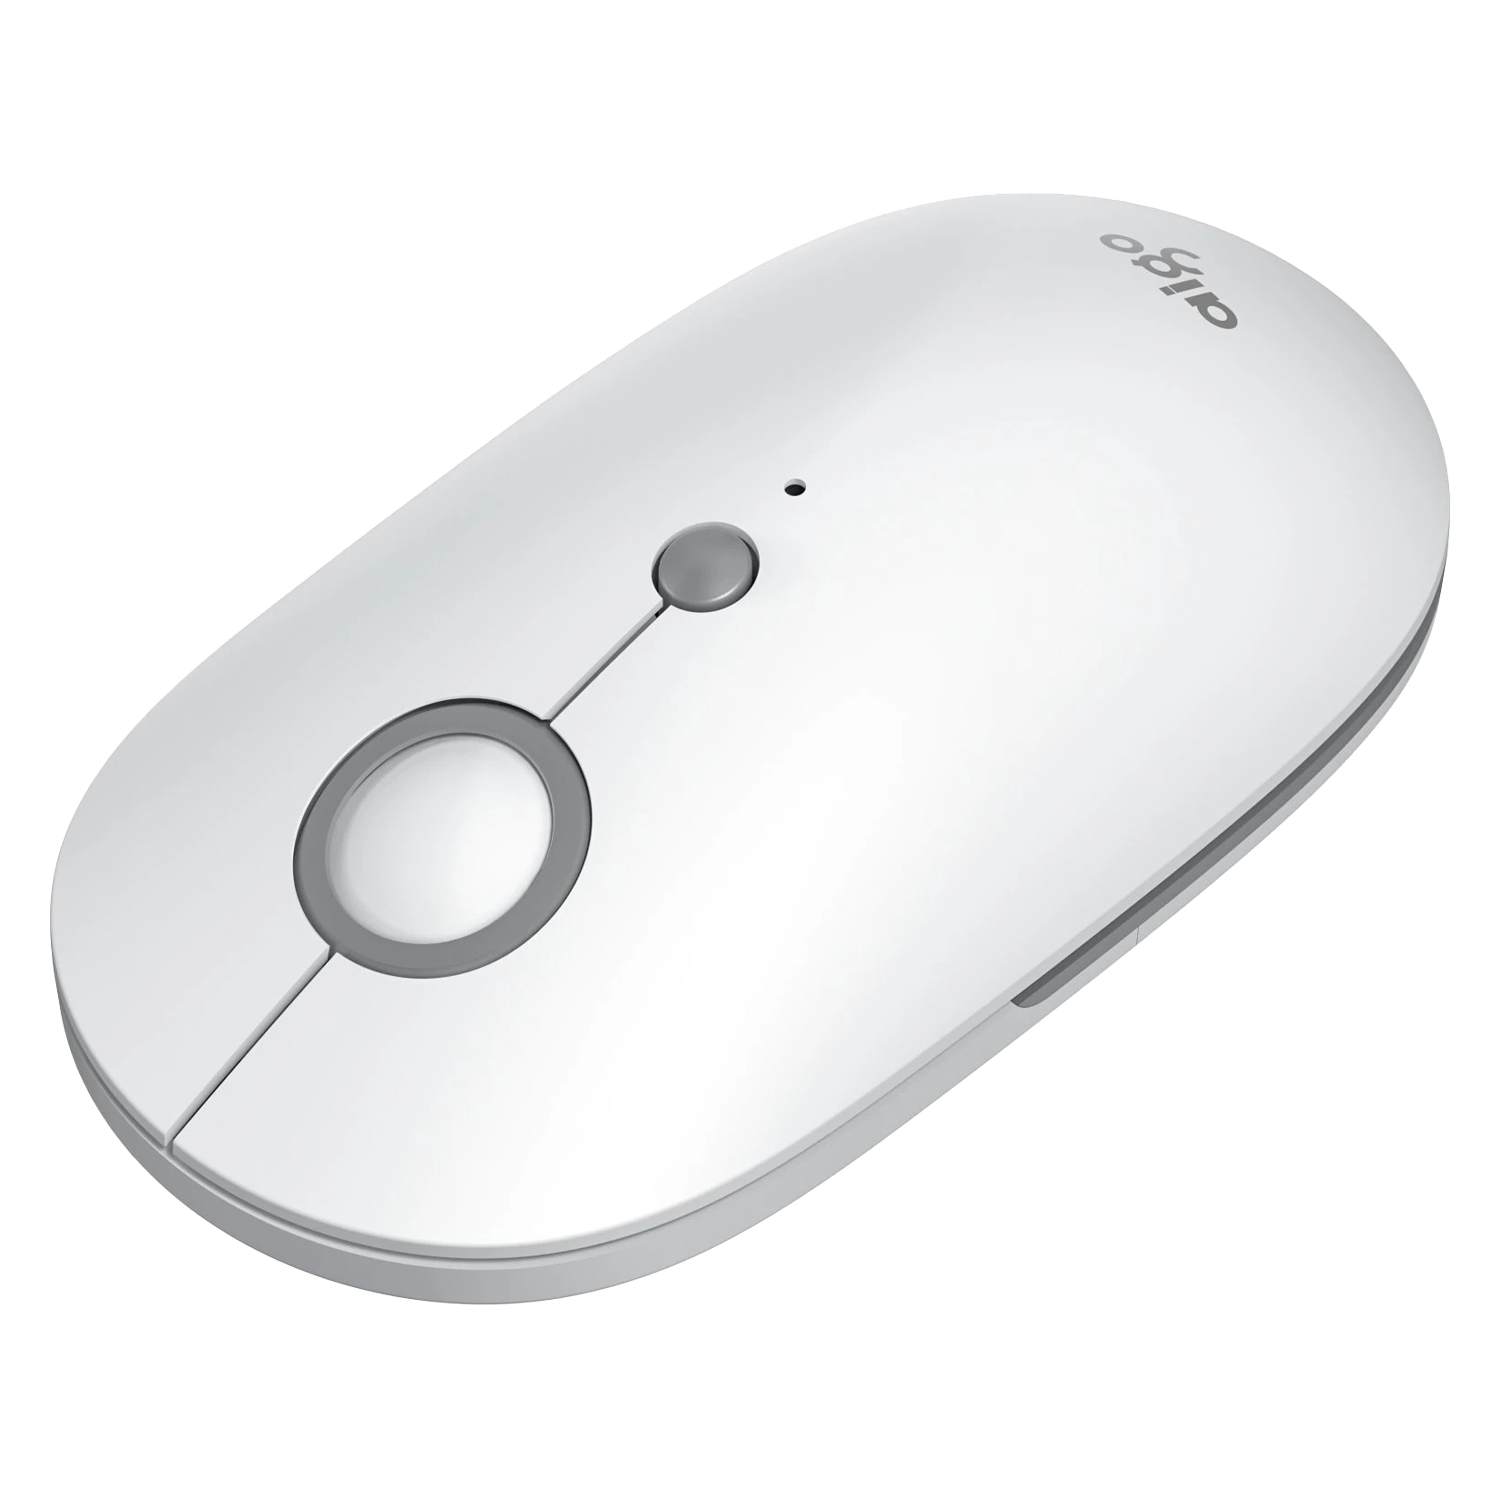 Mouse Aigo M300 Wireless - Branco